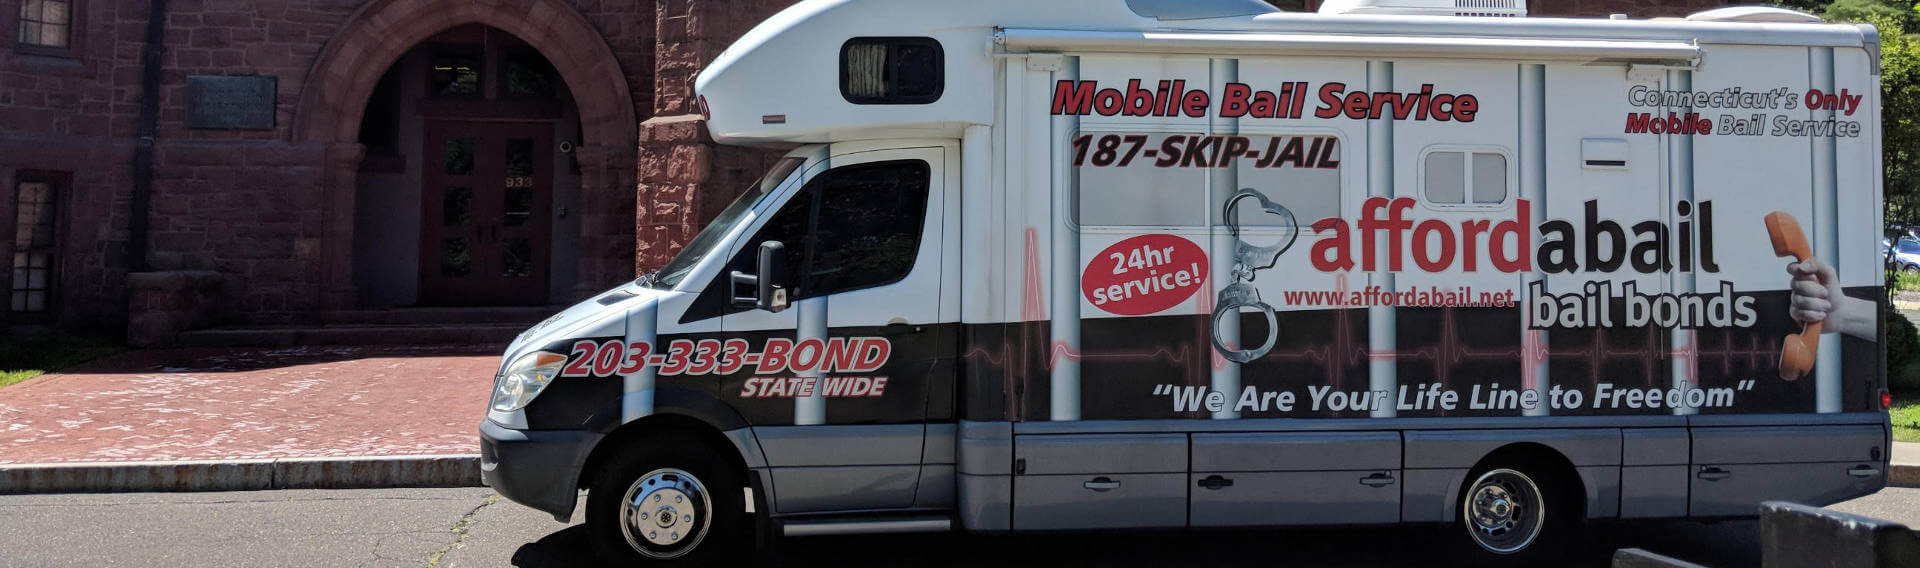 Mobile bail bonds service in West Hartford CT